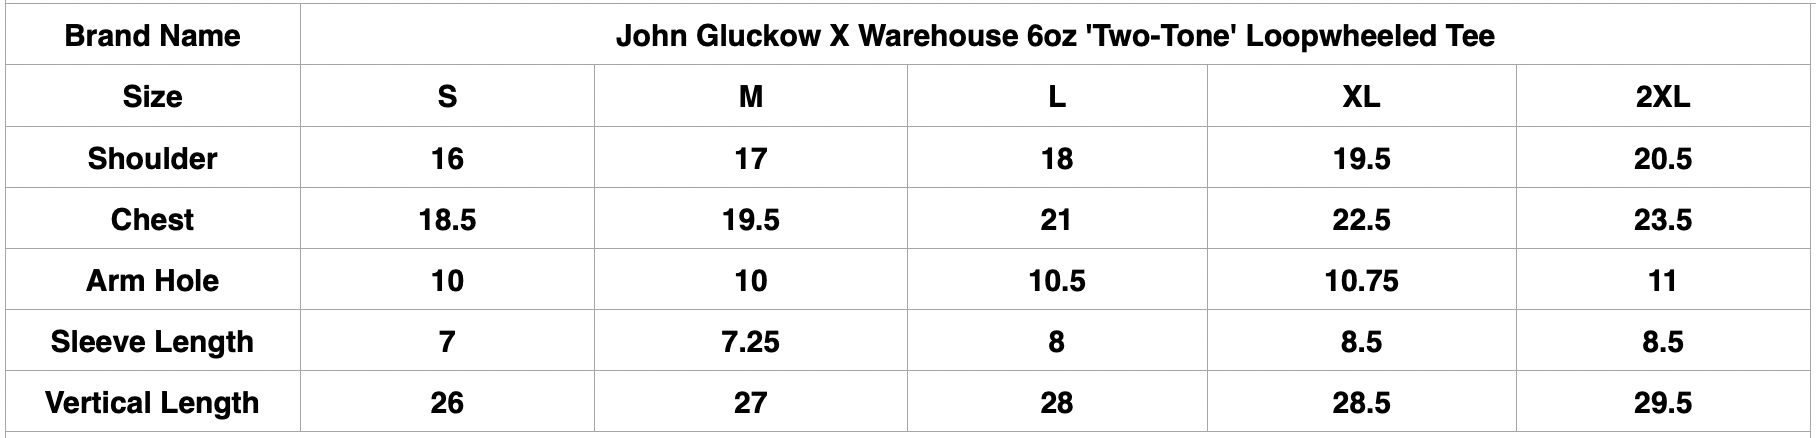 John Gluckow X Warehouse 6oz 'Two-Tone' Loopwheeled Tee (Heather Grey)